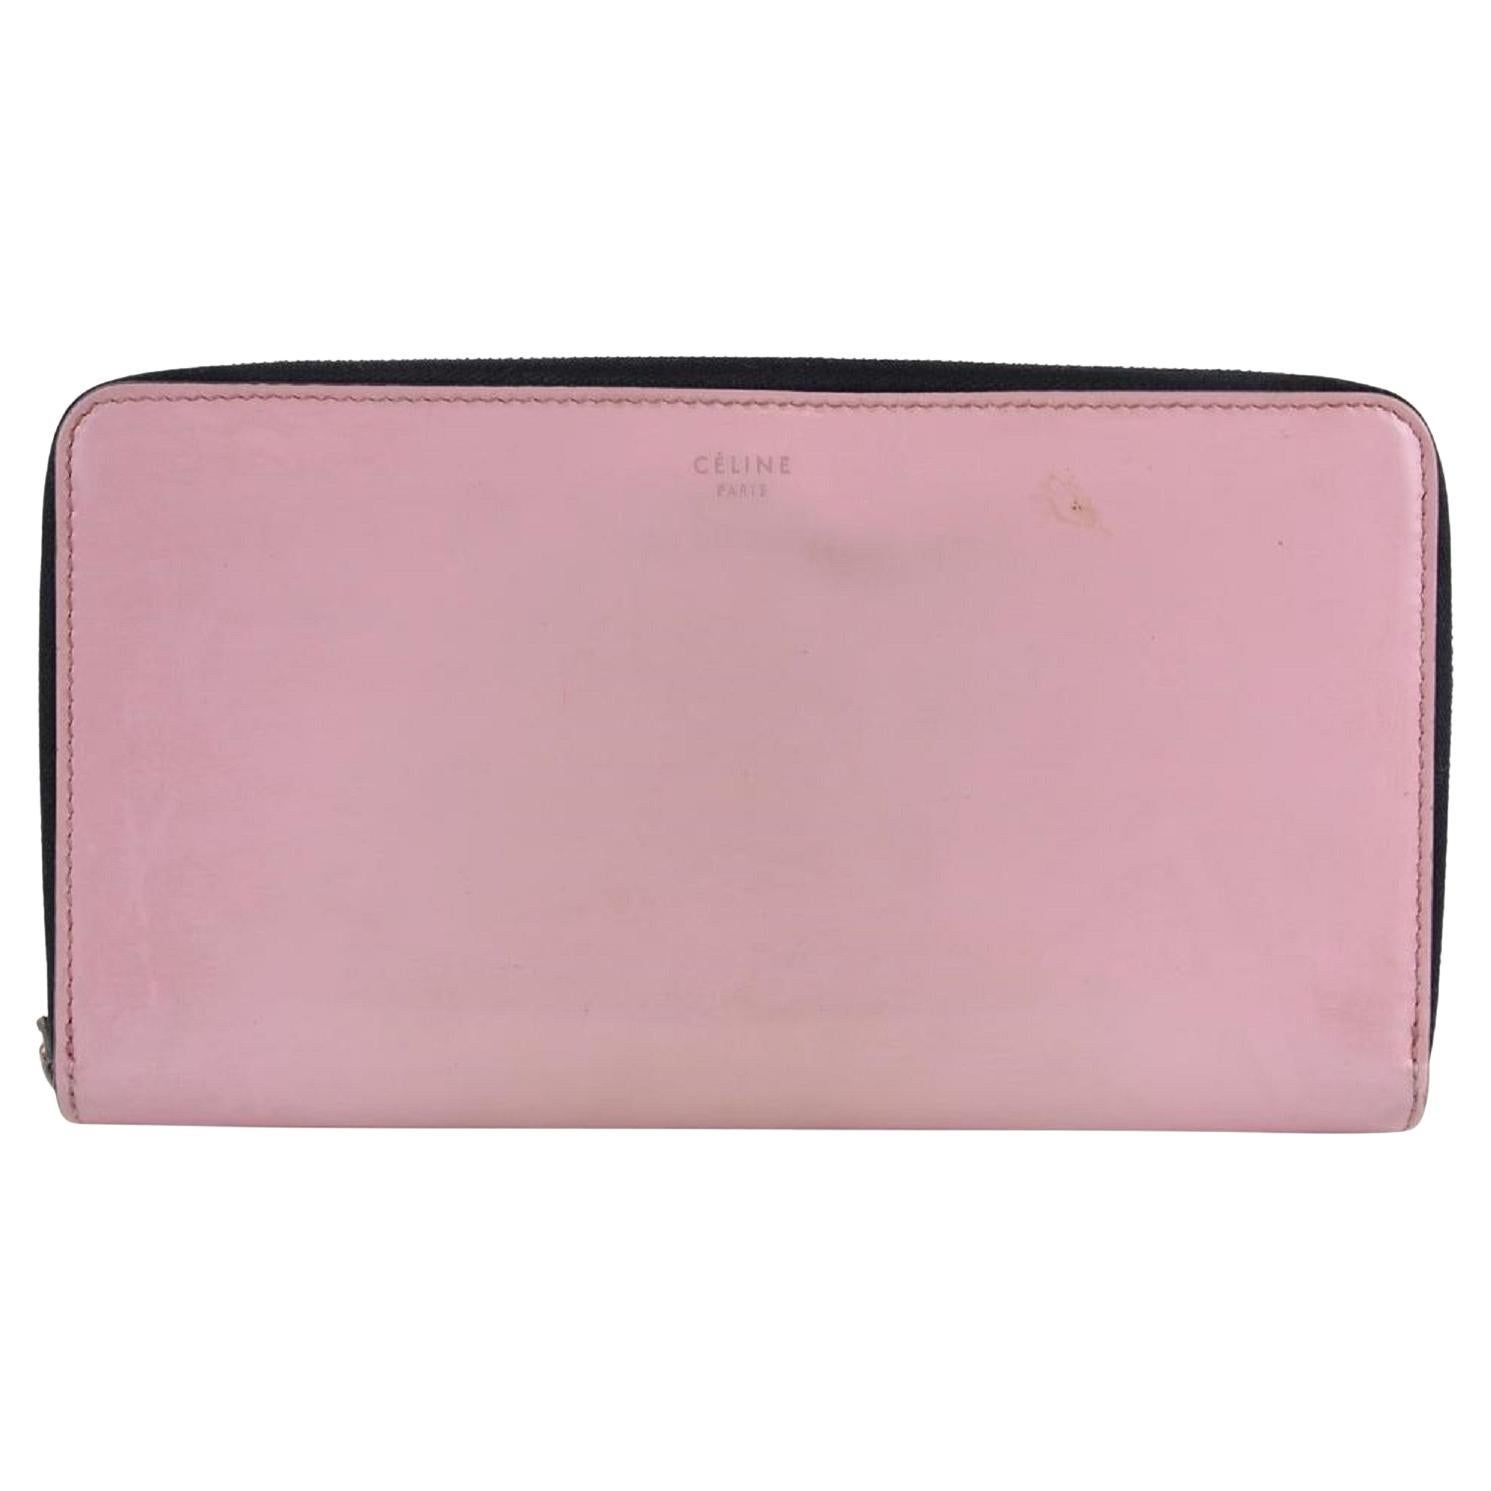 Céline Pink Patent Leather Continental Zip Around Wallet Zippy  L4CEL1221 For Sale